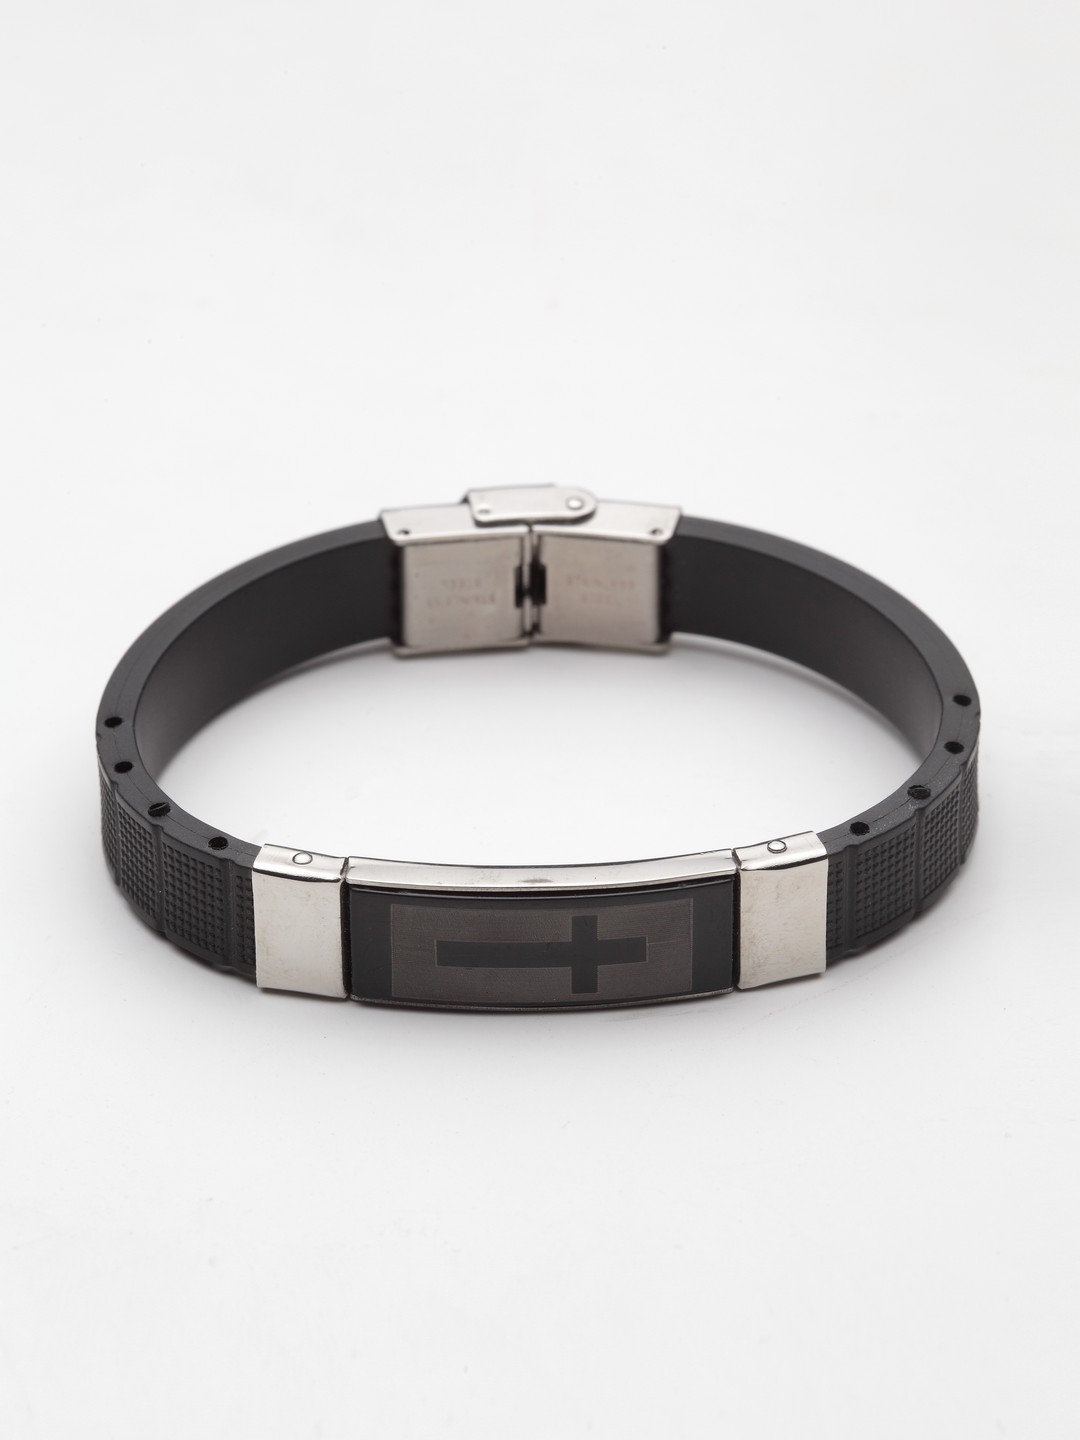 Personalized Stainless Steel Men's Bracelet - Sytara